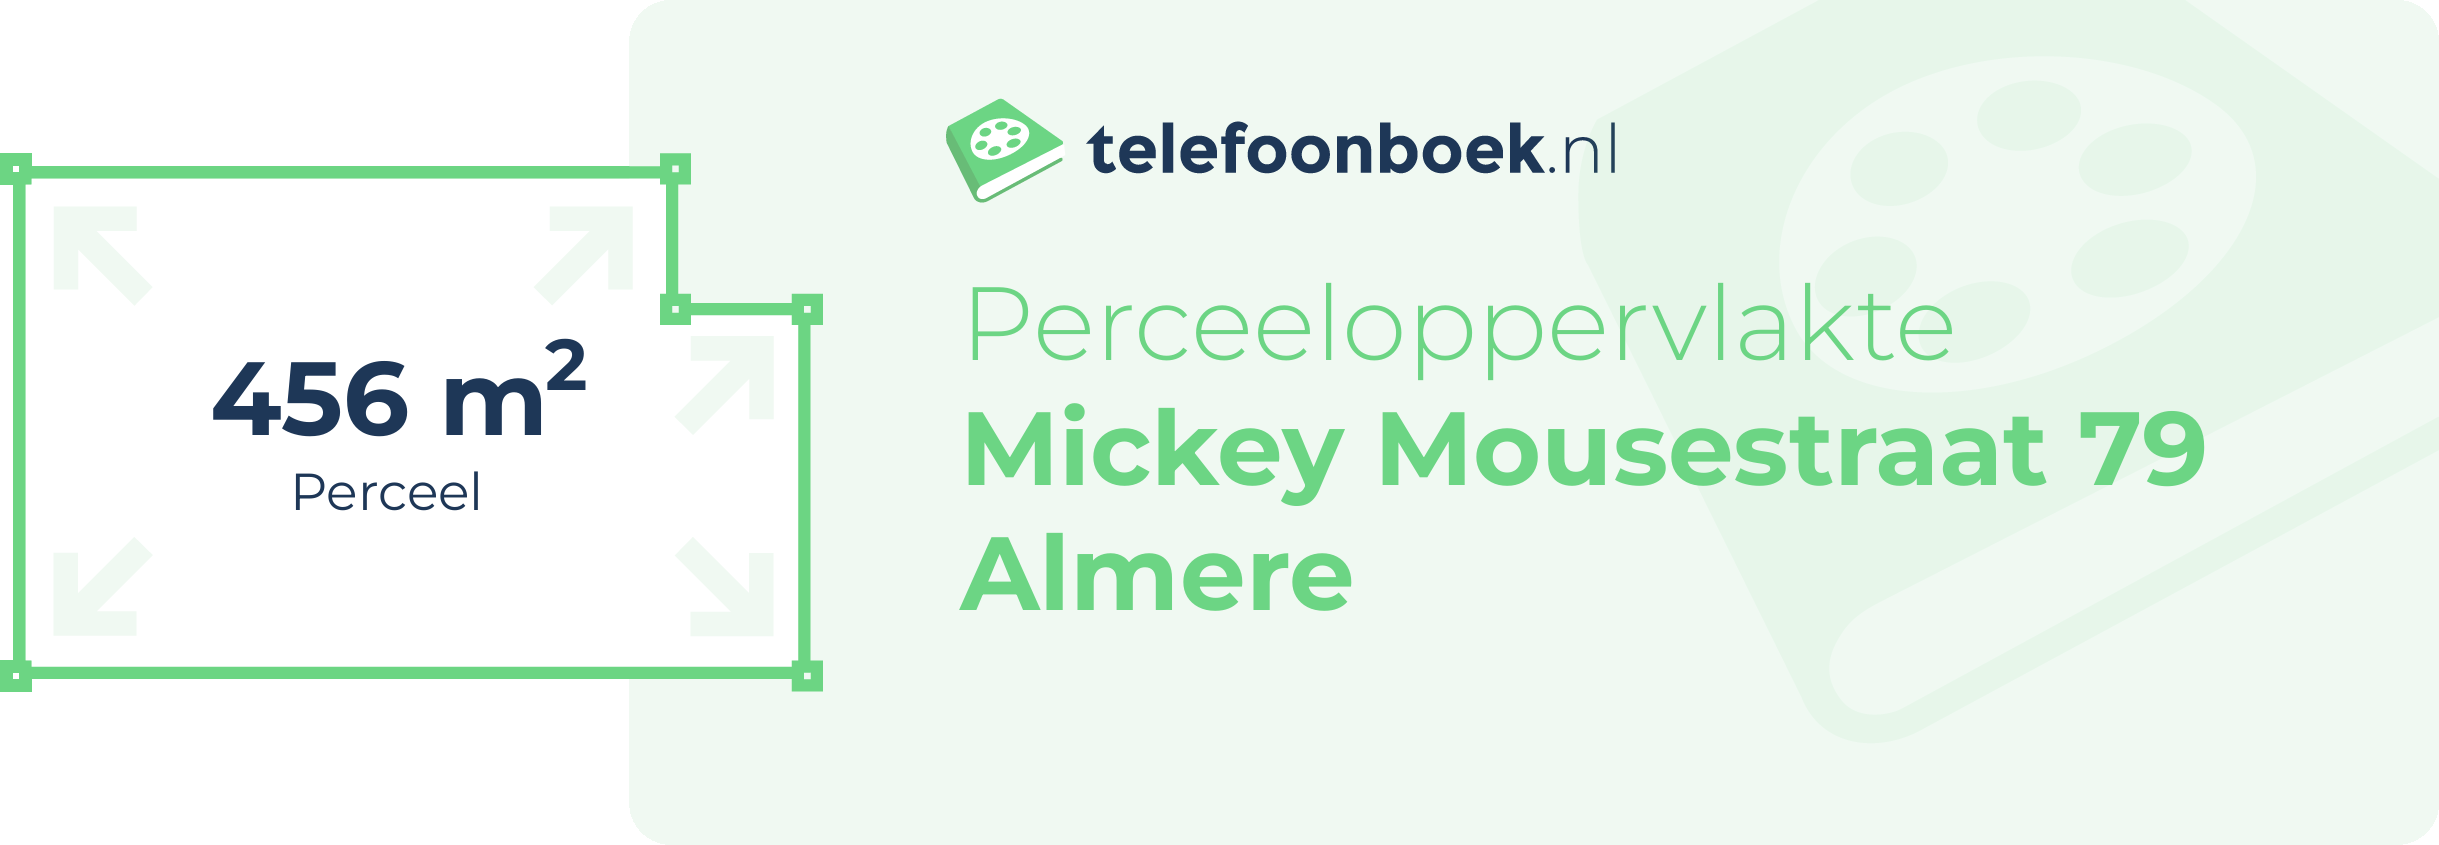 Perceeloppervlakte Mickey Mousestraat 79 Almere